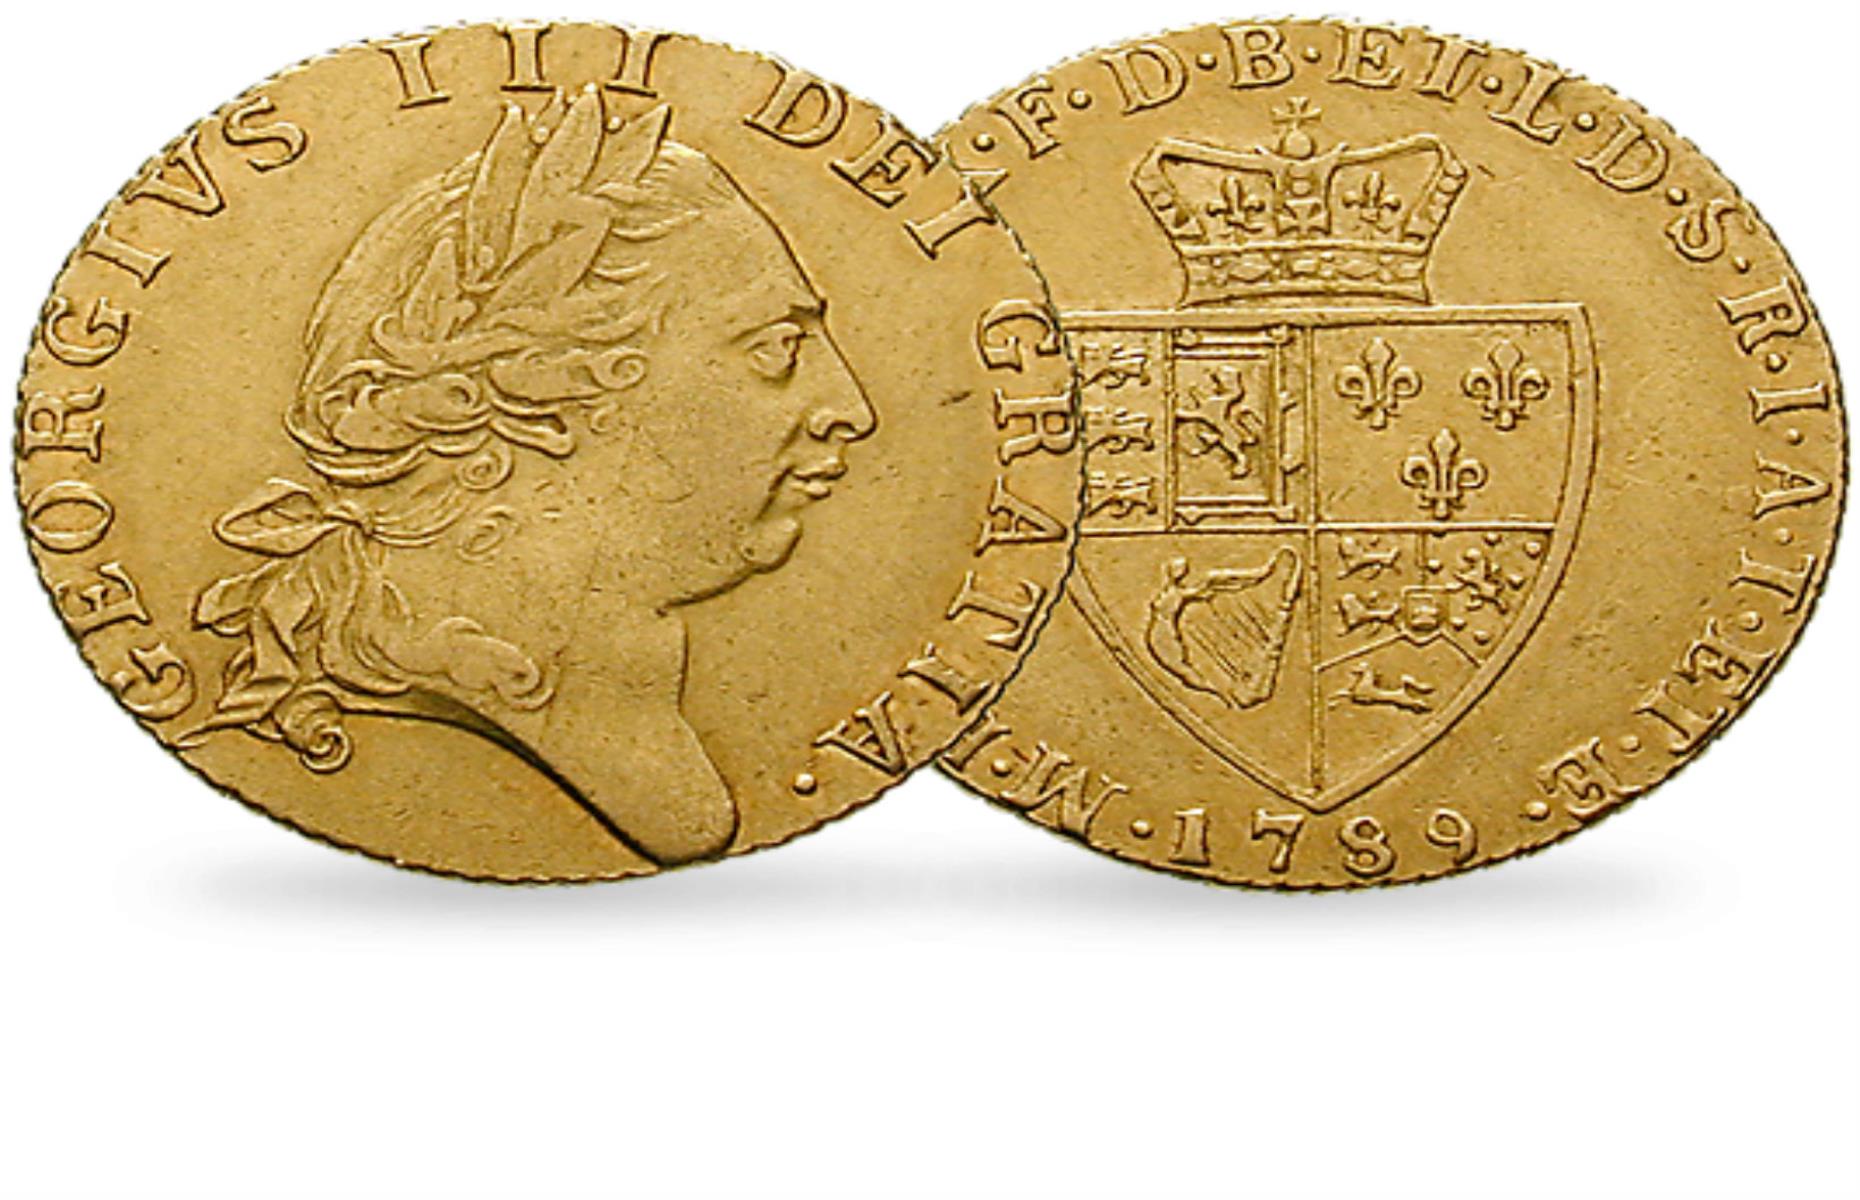 King George III Gold Spade Guinea - worth £1,499